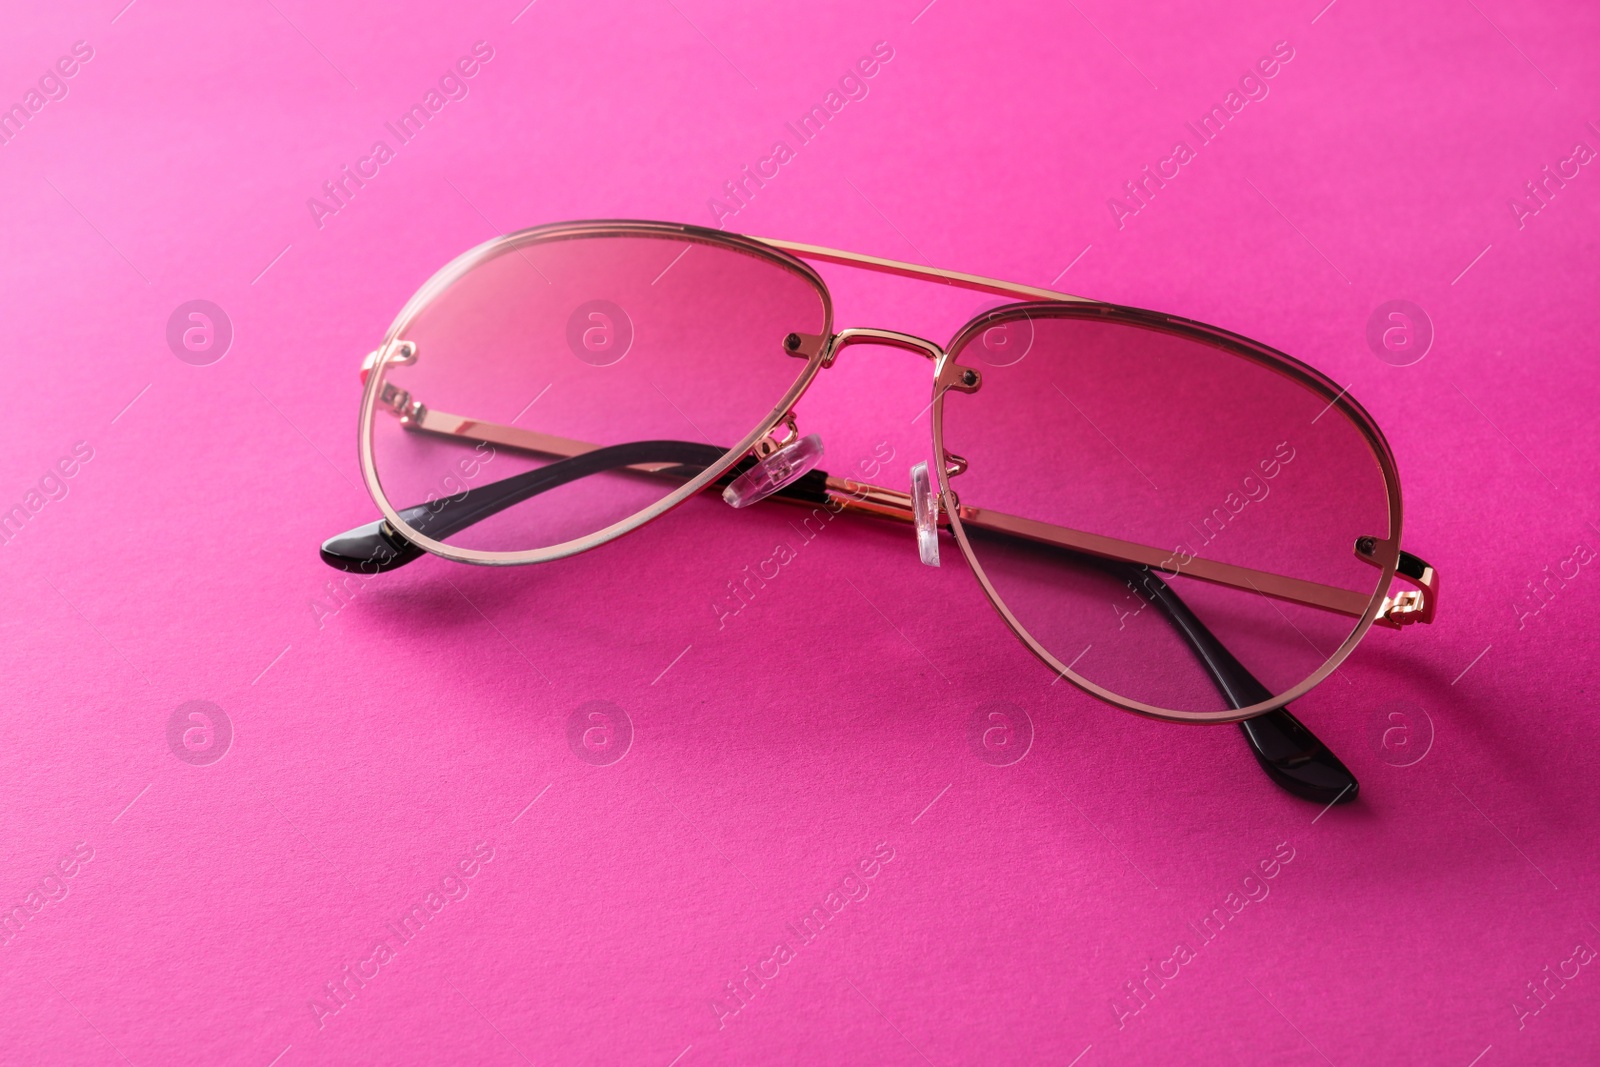 Photo of New stylish sunglasses on pink background, closeup. Fashionable accessory